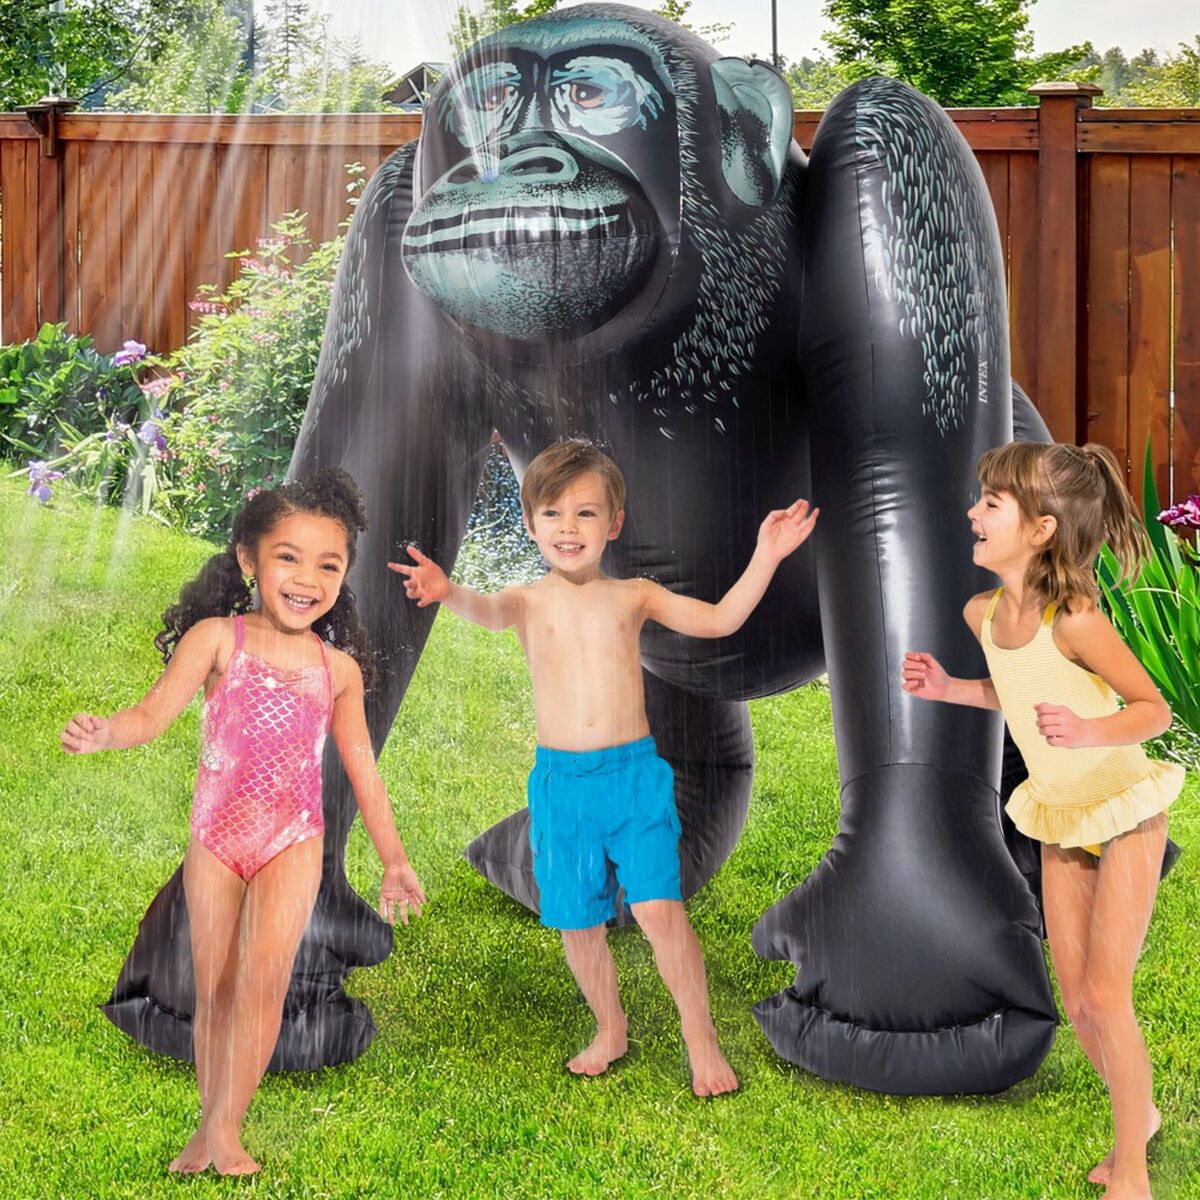 Water Sprinkler and Sprayer Toy Intex PVC 170 x 185 x 170 cm Gorilla